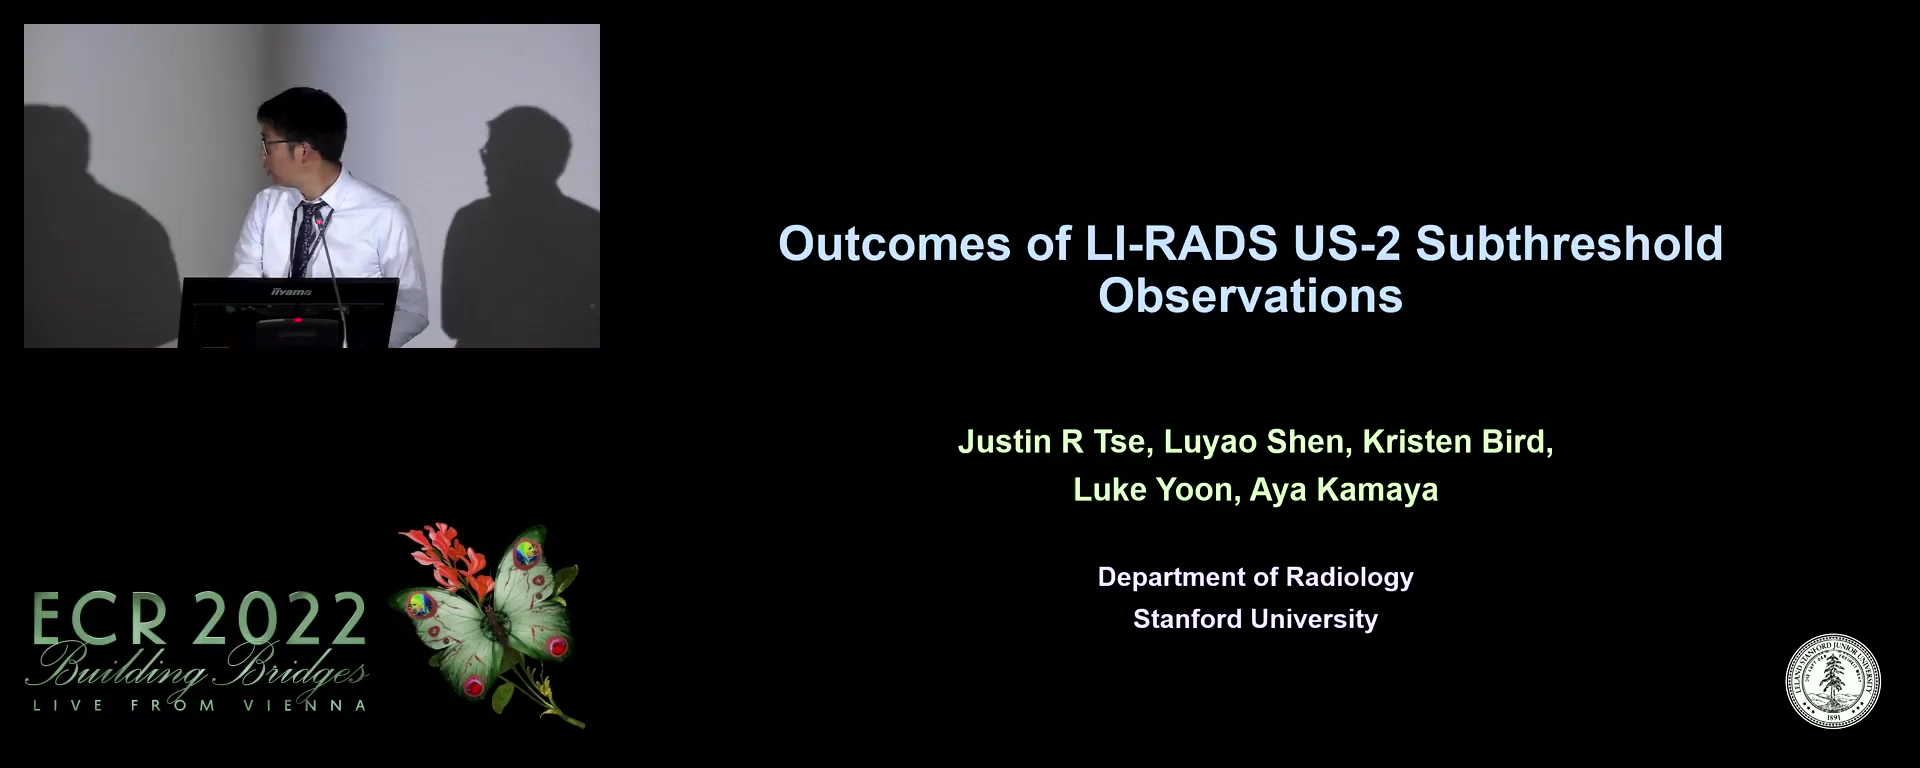 Outcomes of LI-RADS US-2 subthreshold observations - Justin Tse, Stanford / US